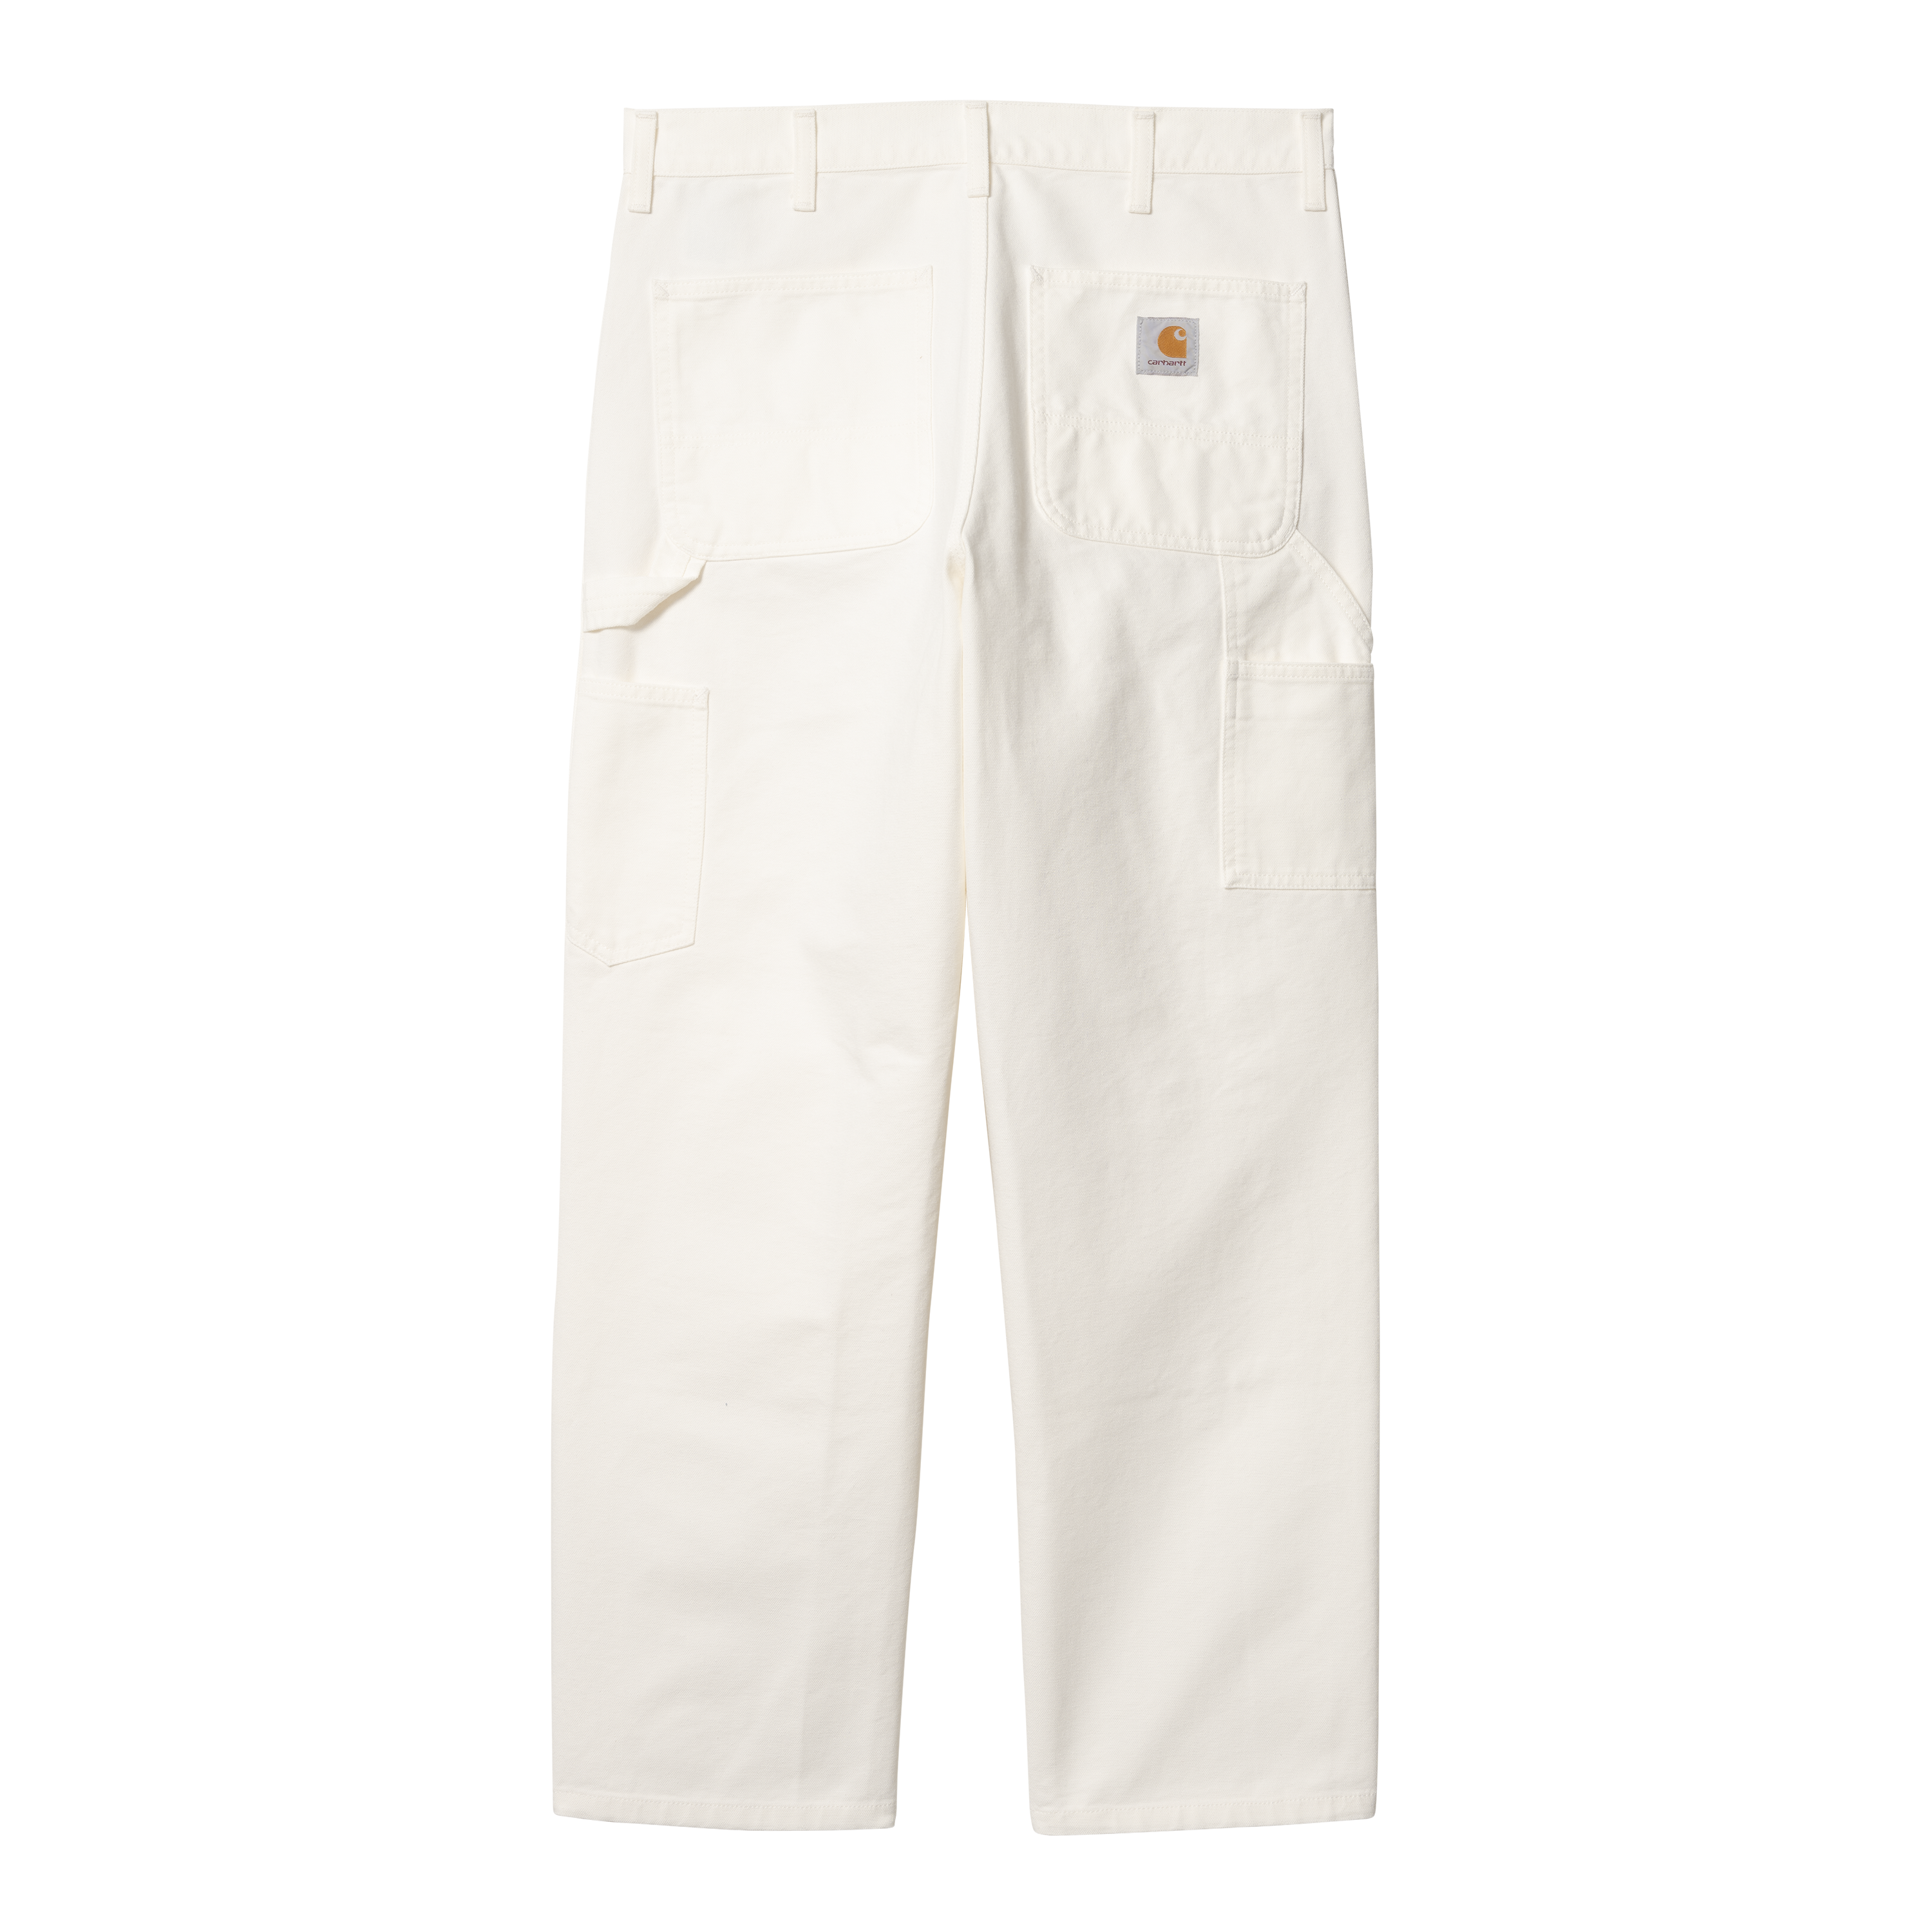 Carhartt WIP Double Knee Pant in Bianco